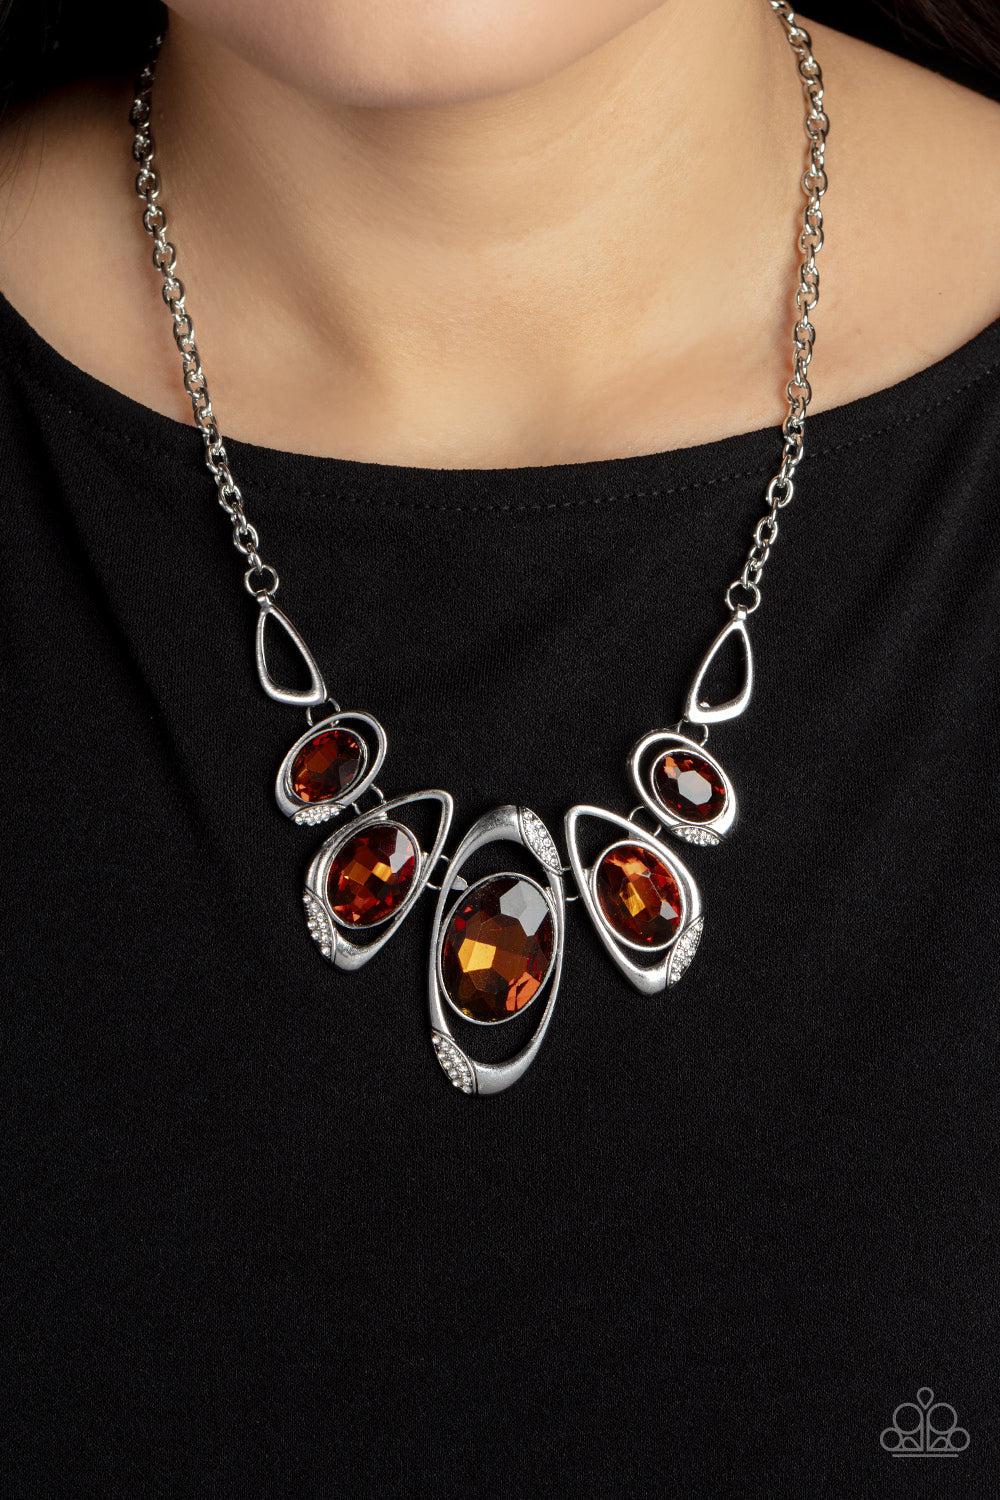 Hypnotic Twinkle Brown Rhinestone Necklace - Paparazzi Accessories- lightbox - CarasShop.com - $5 Jewelry by Cara Jewels